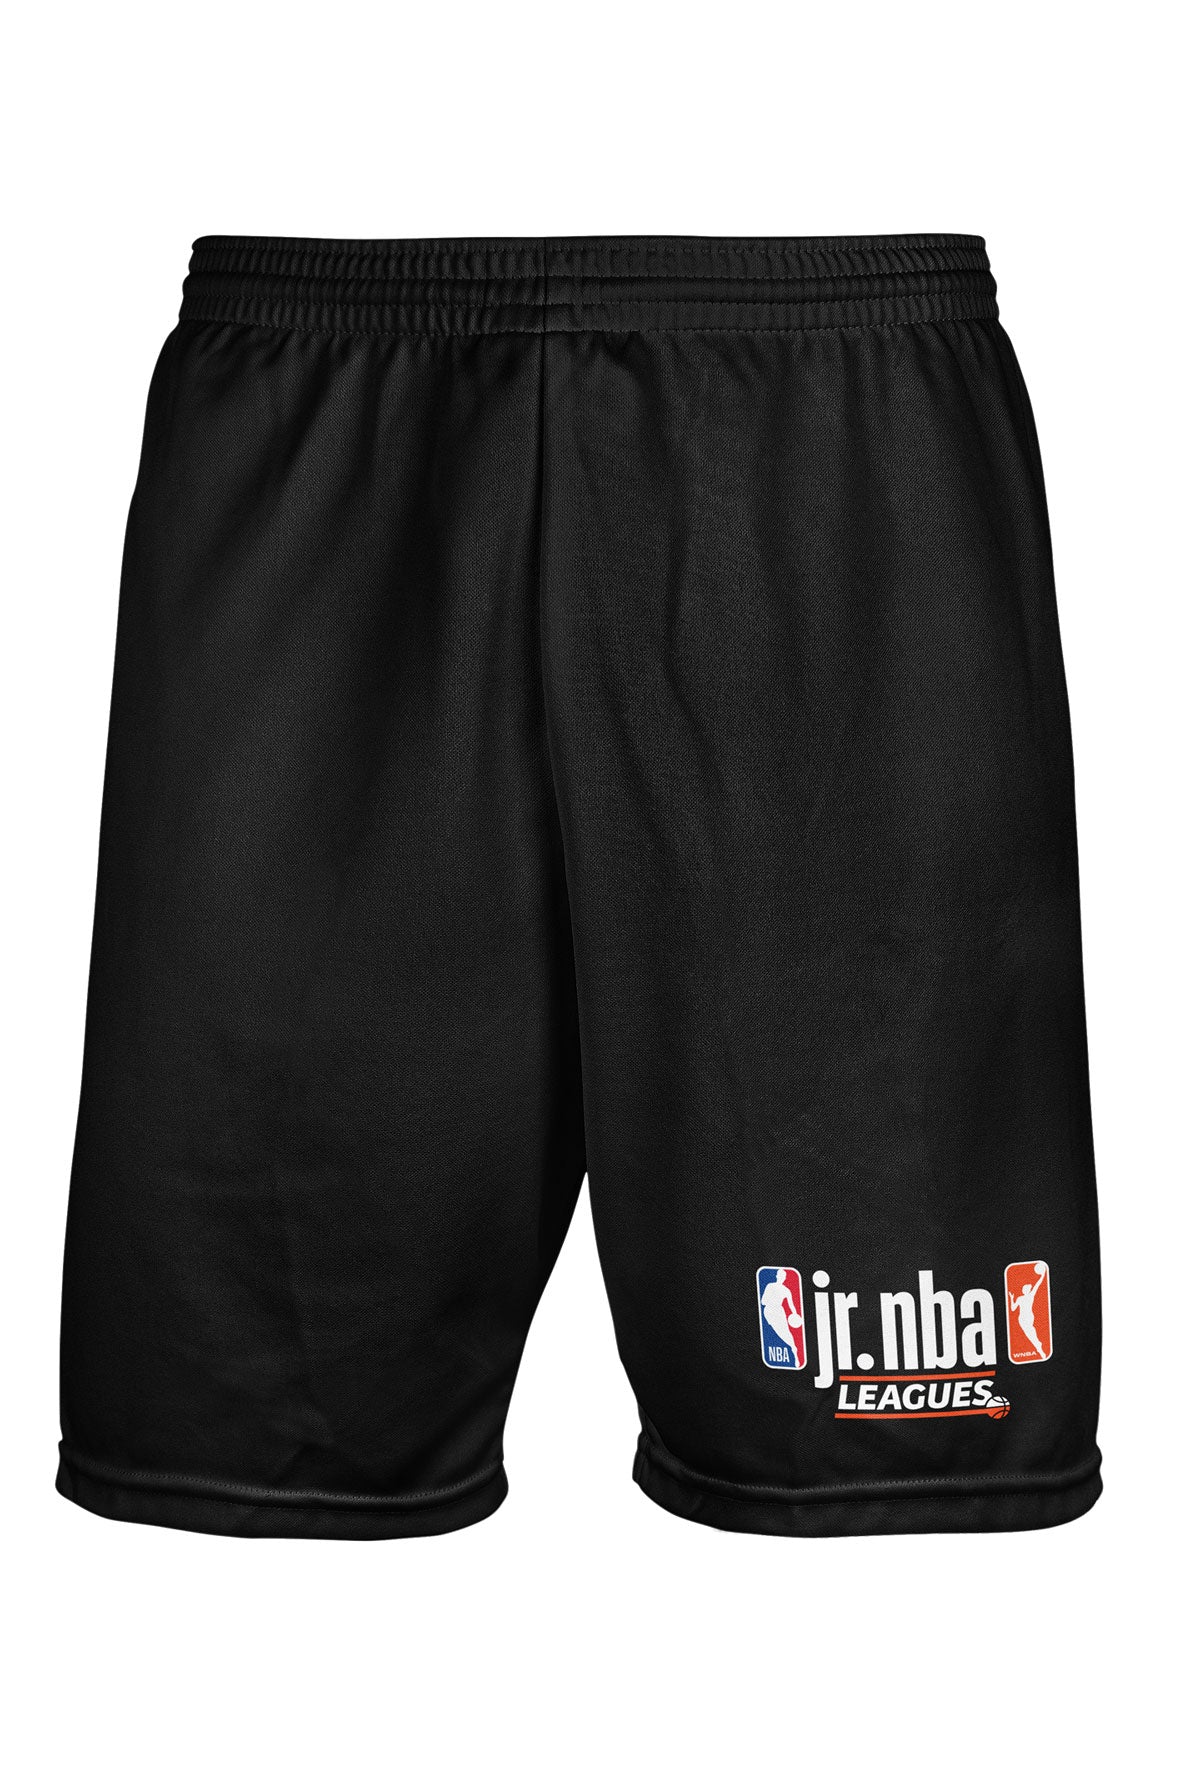 Jr. NBA Leagues Shorts